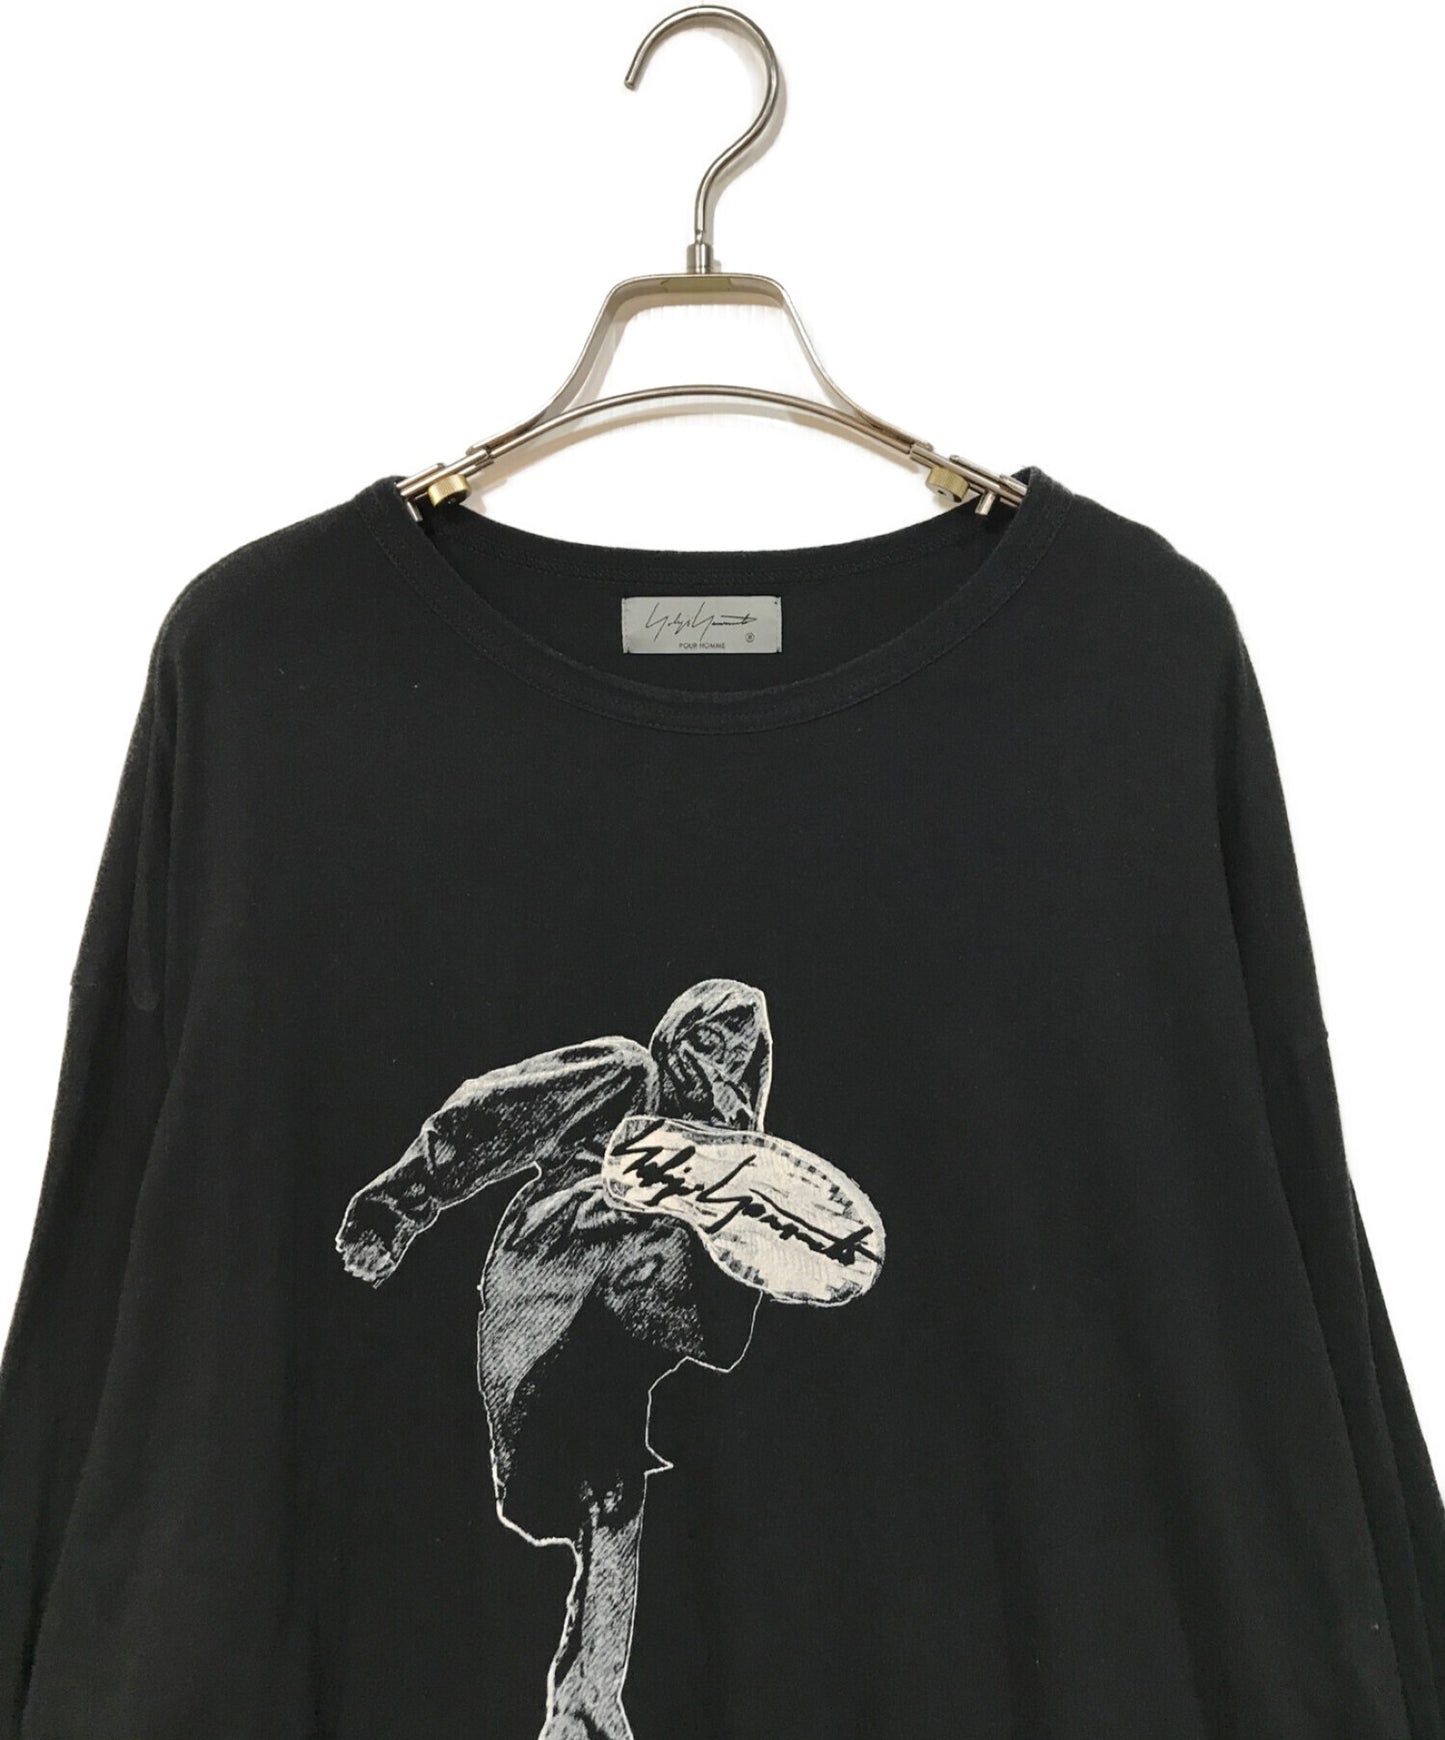 yohji yamamoto pour homme cotton jersey big long sleek karate print hx-t95-077